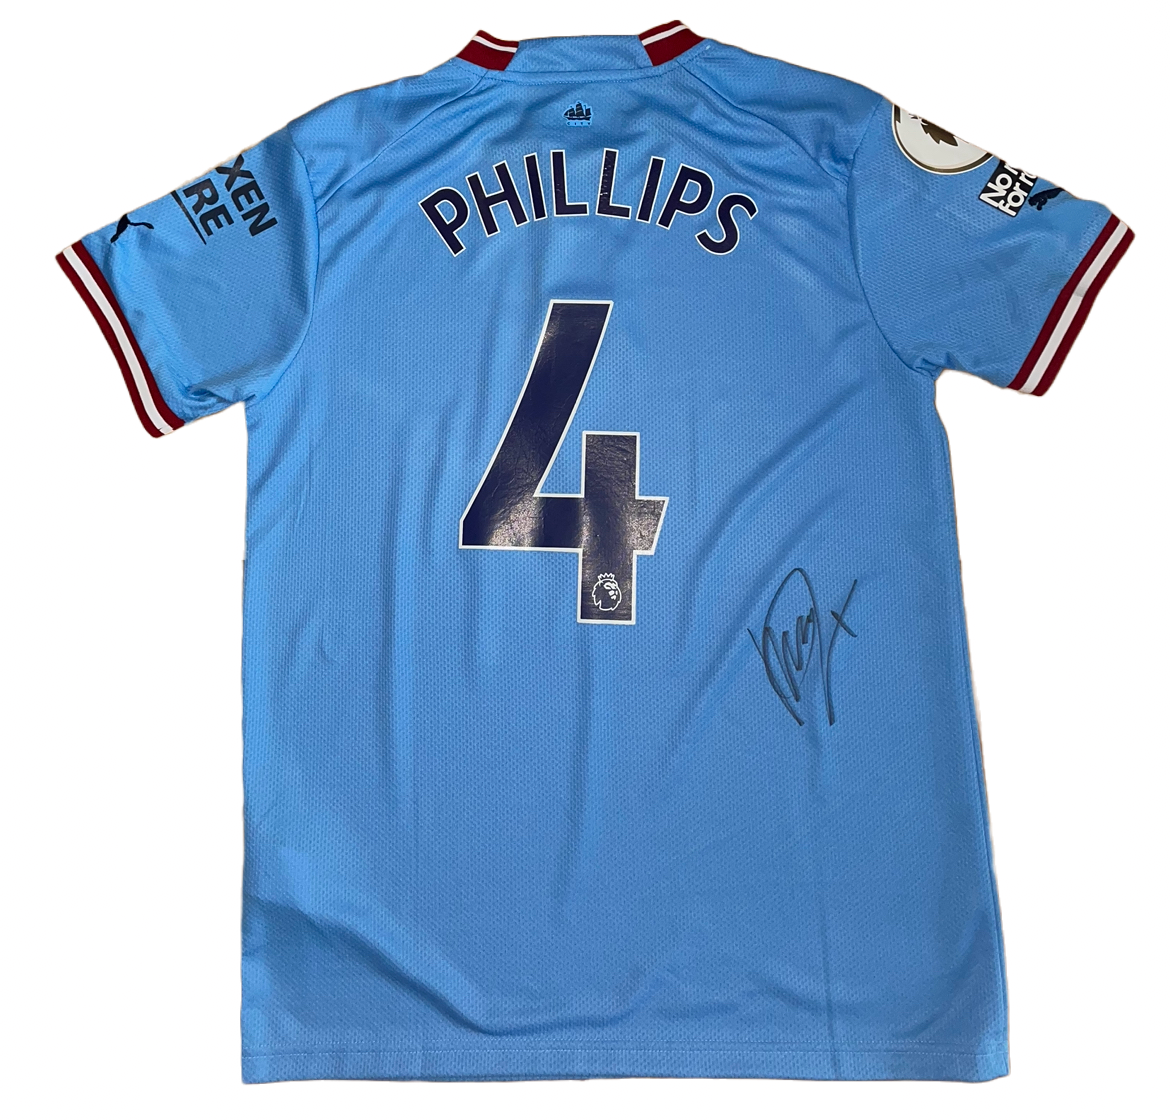 Signed Kalvin Phillips Manchester City Home Shirt 22/23 (Signed On Shirt)